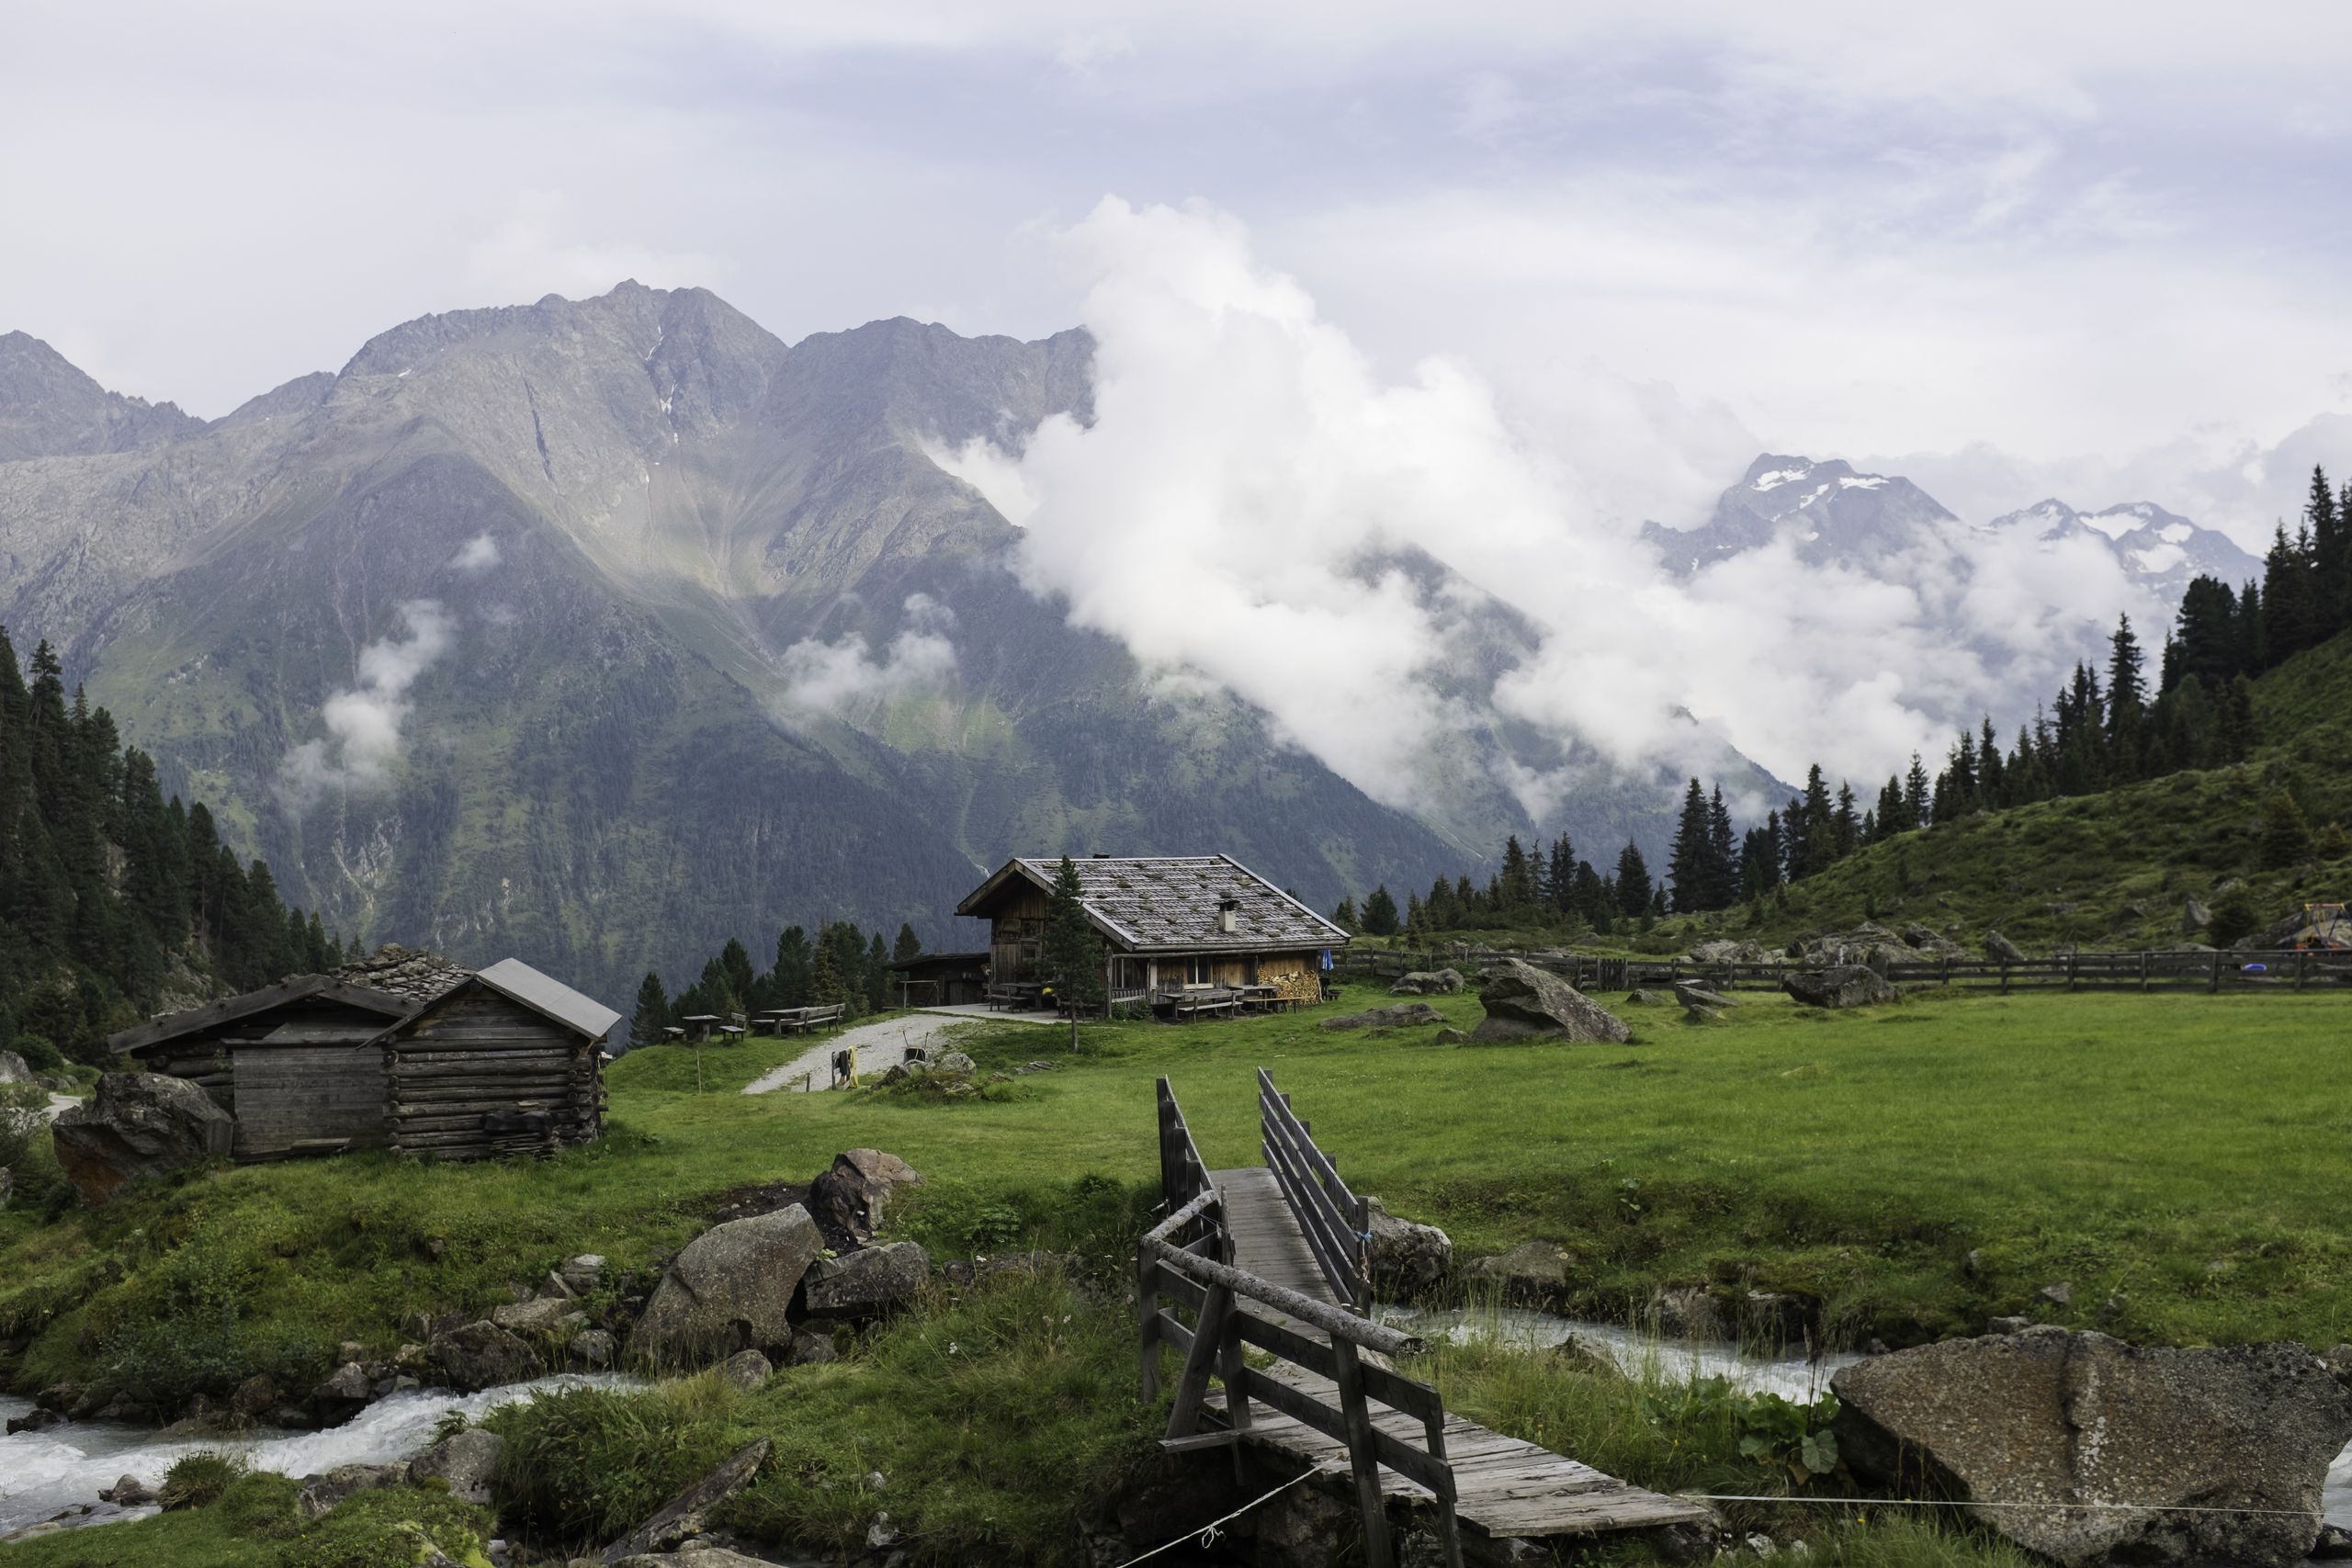 Ferie i bjerghytter i Østrig | Nyd bjergene på hytteferie